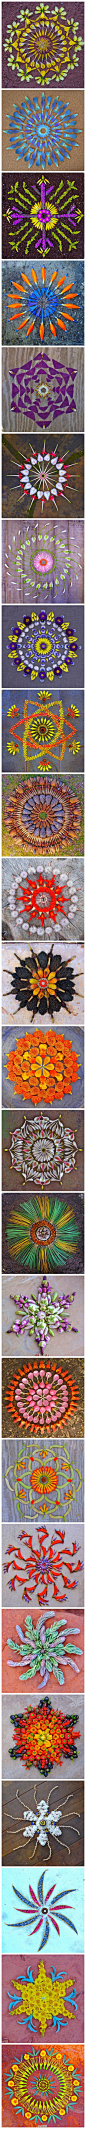 Kathy Klein，美国女艺术家，她使用花朵、岩石、贝壳等创作精美的纹样图案，称之为Mandala艺术，Mandala原意是指佛教和印度教修法地方的圆形或方形标记，官网上称"她狂热的爱好自然，创作首先是让自己有一个冥想的空间"。